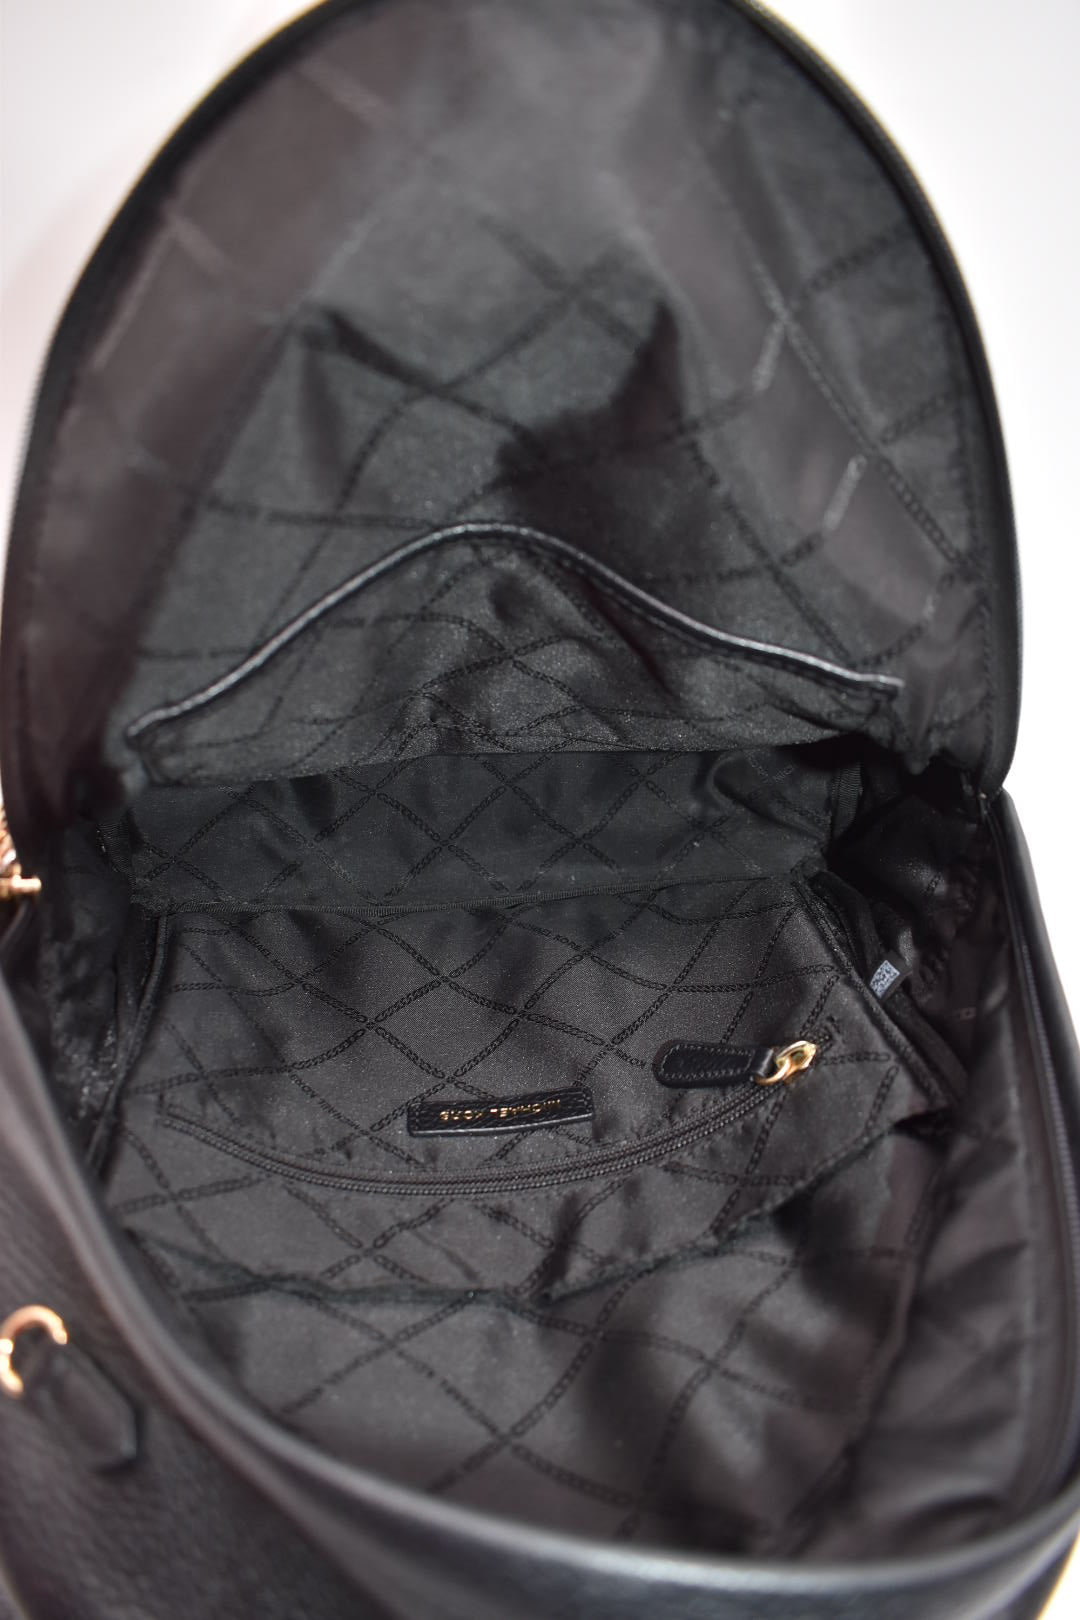 Michael Kors Slater Medium Pebbled Leather Backpack